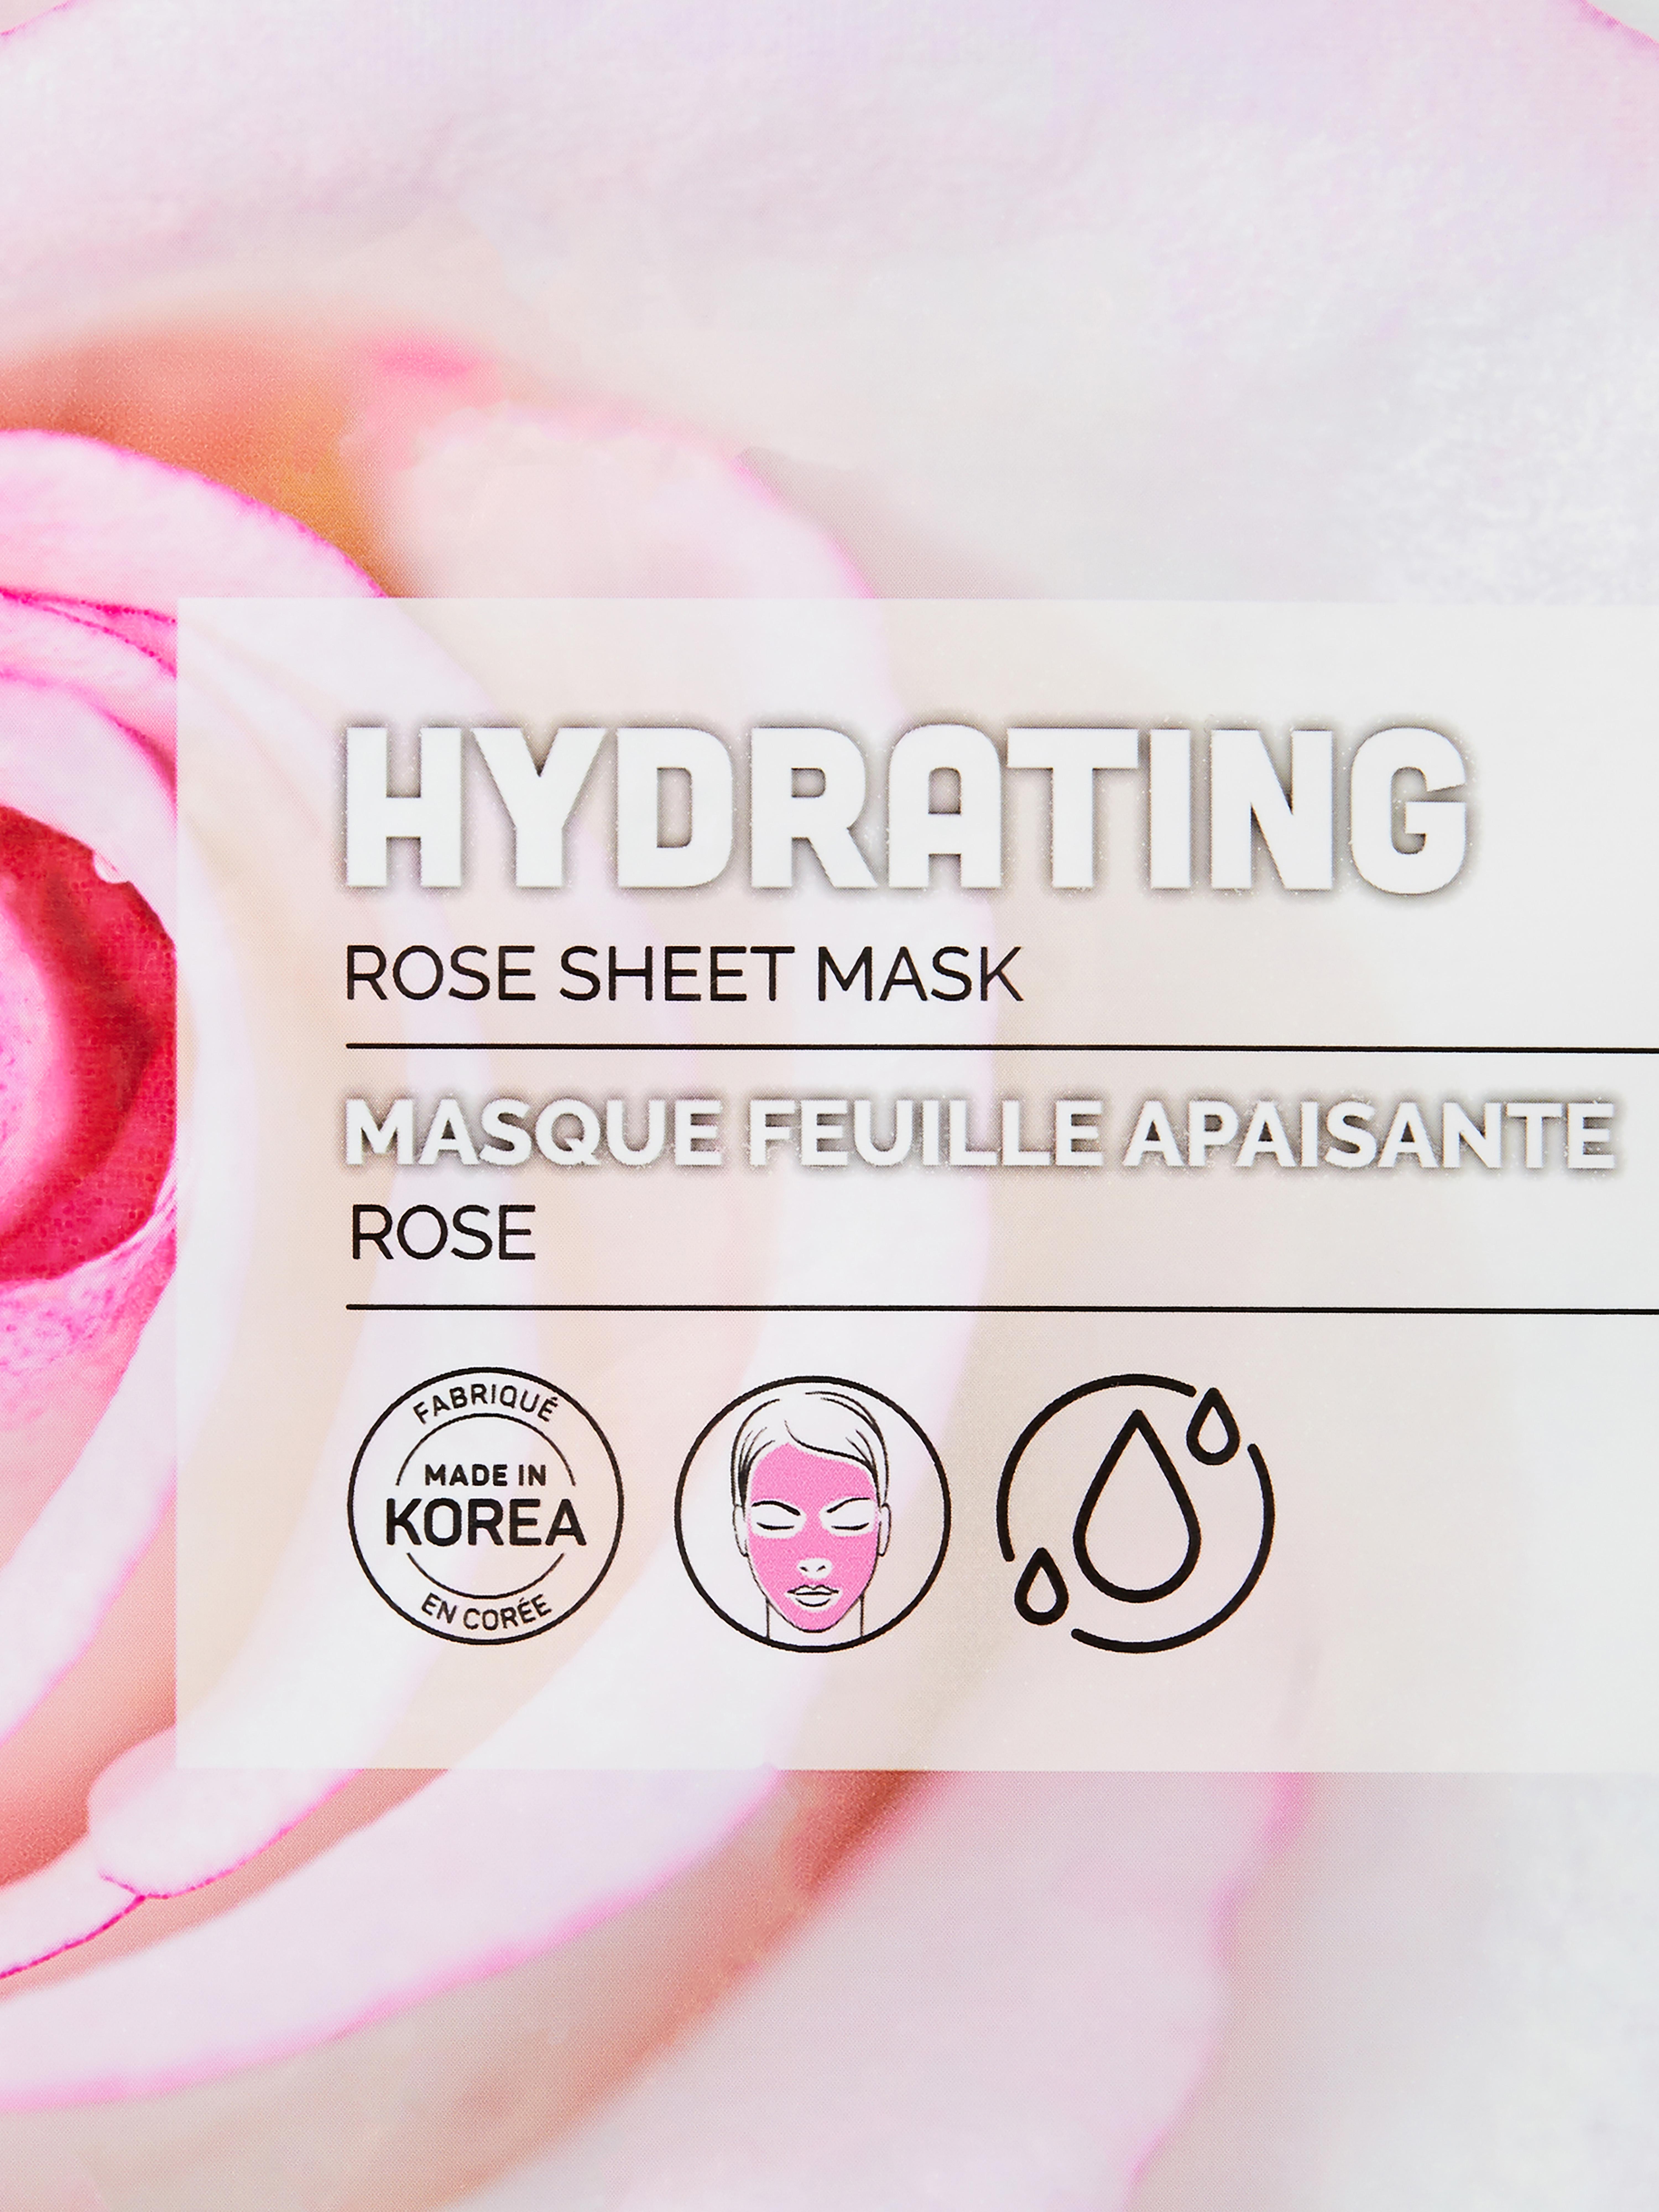 PS... Hydrating Rose Sheet Mask